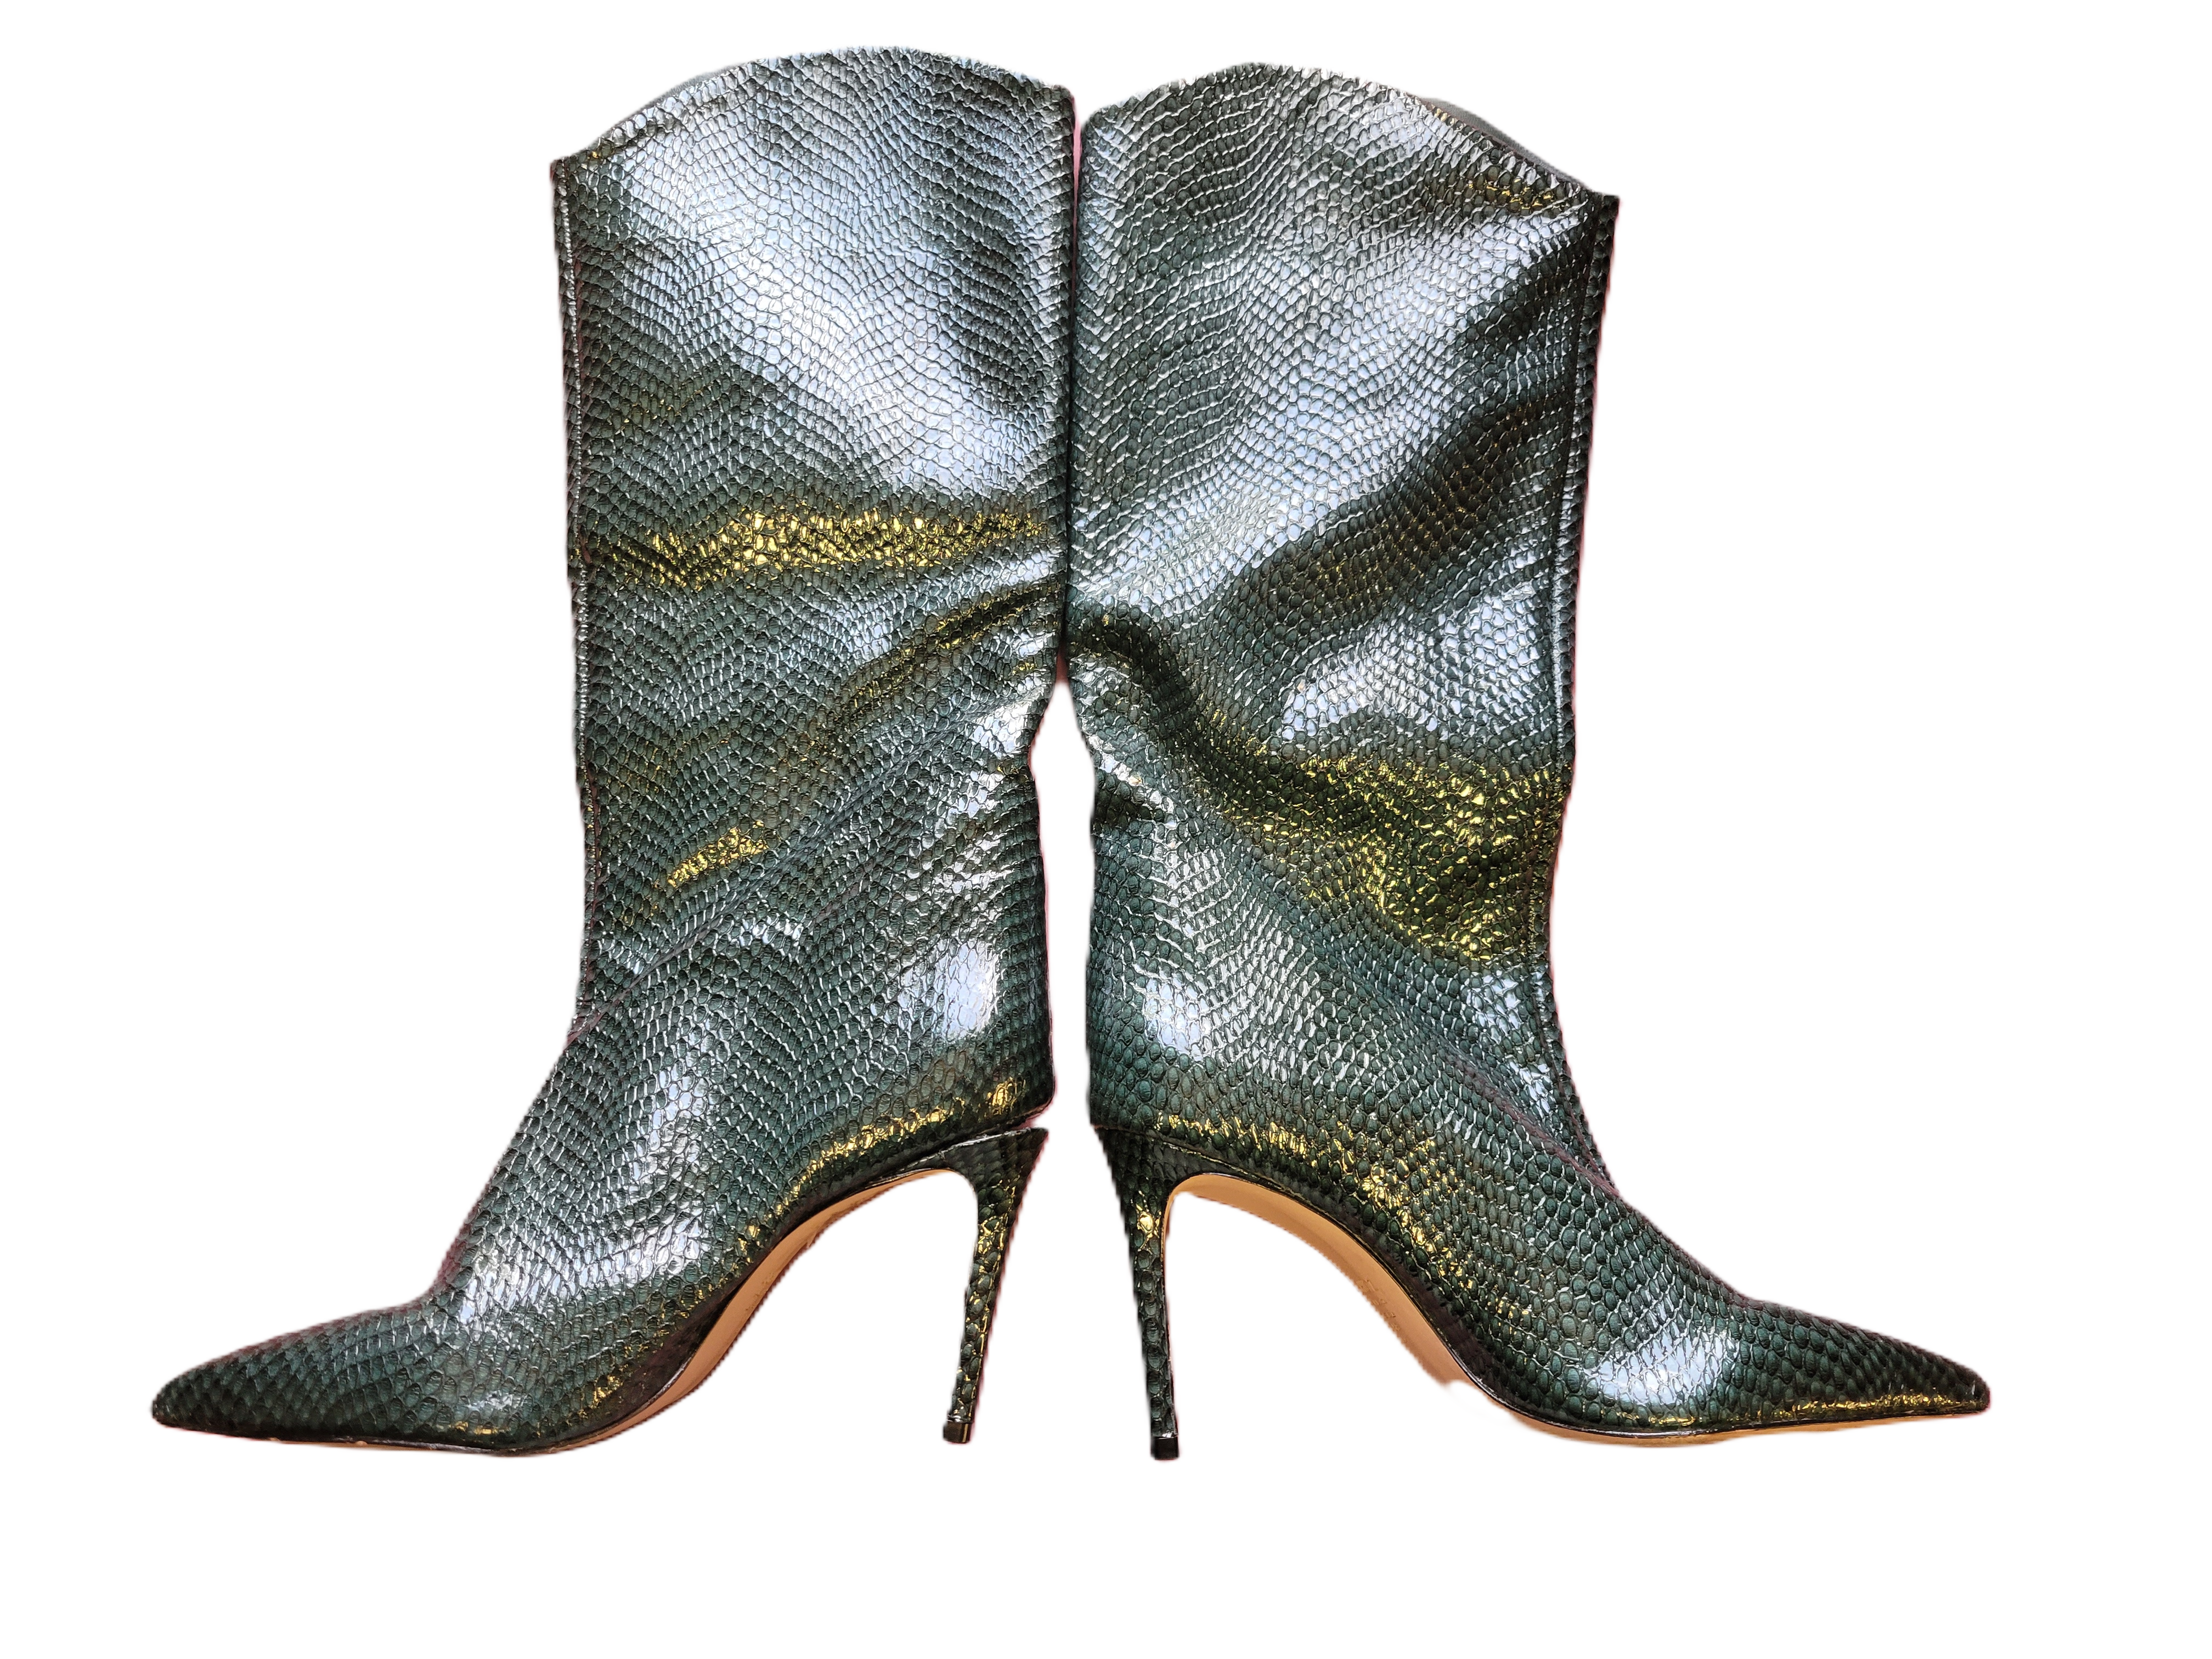 Schutz Maryana Boot in Posy Green Women's Size 8.5 -Used